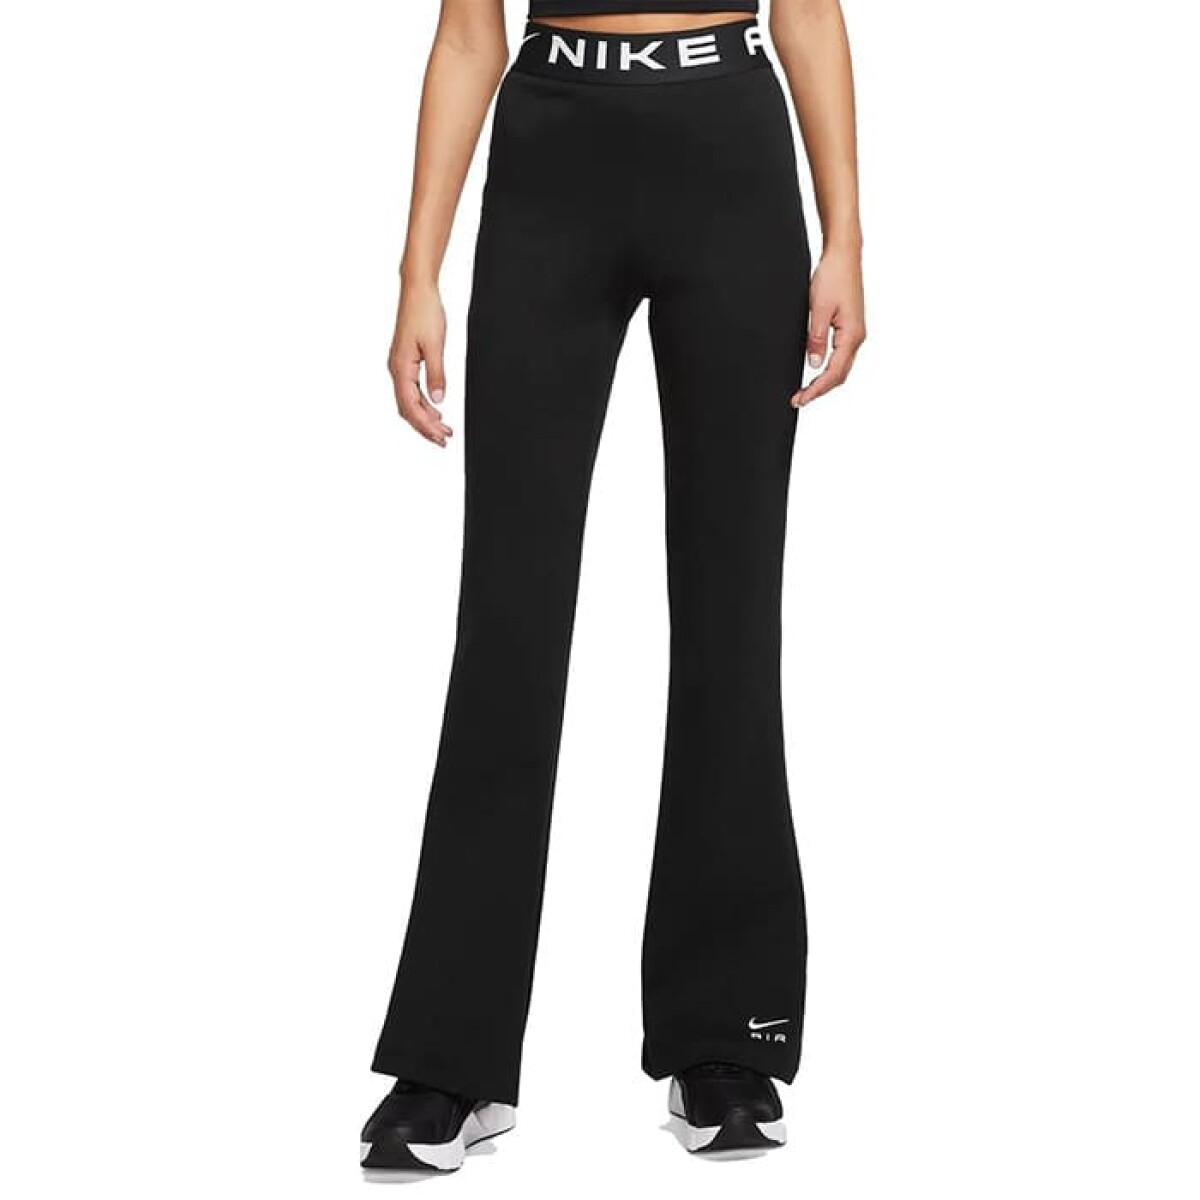 Calza Nike Air Sportwear de Mujer - FB8070-010 - Negro-blanco 